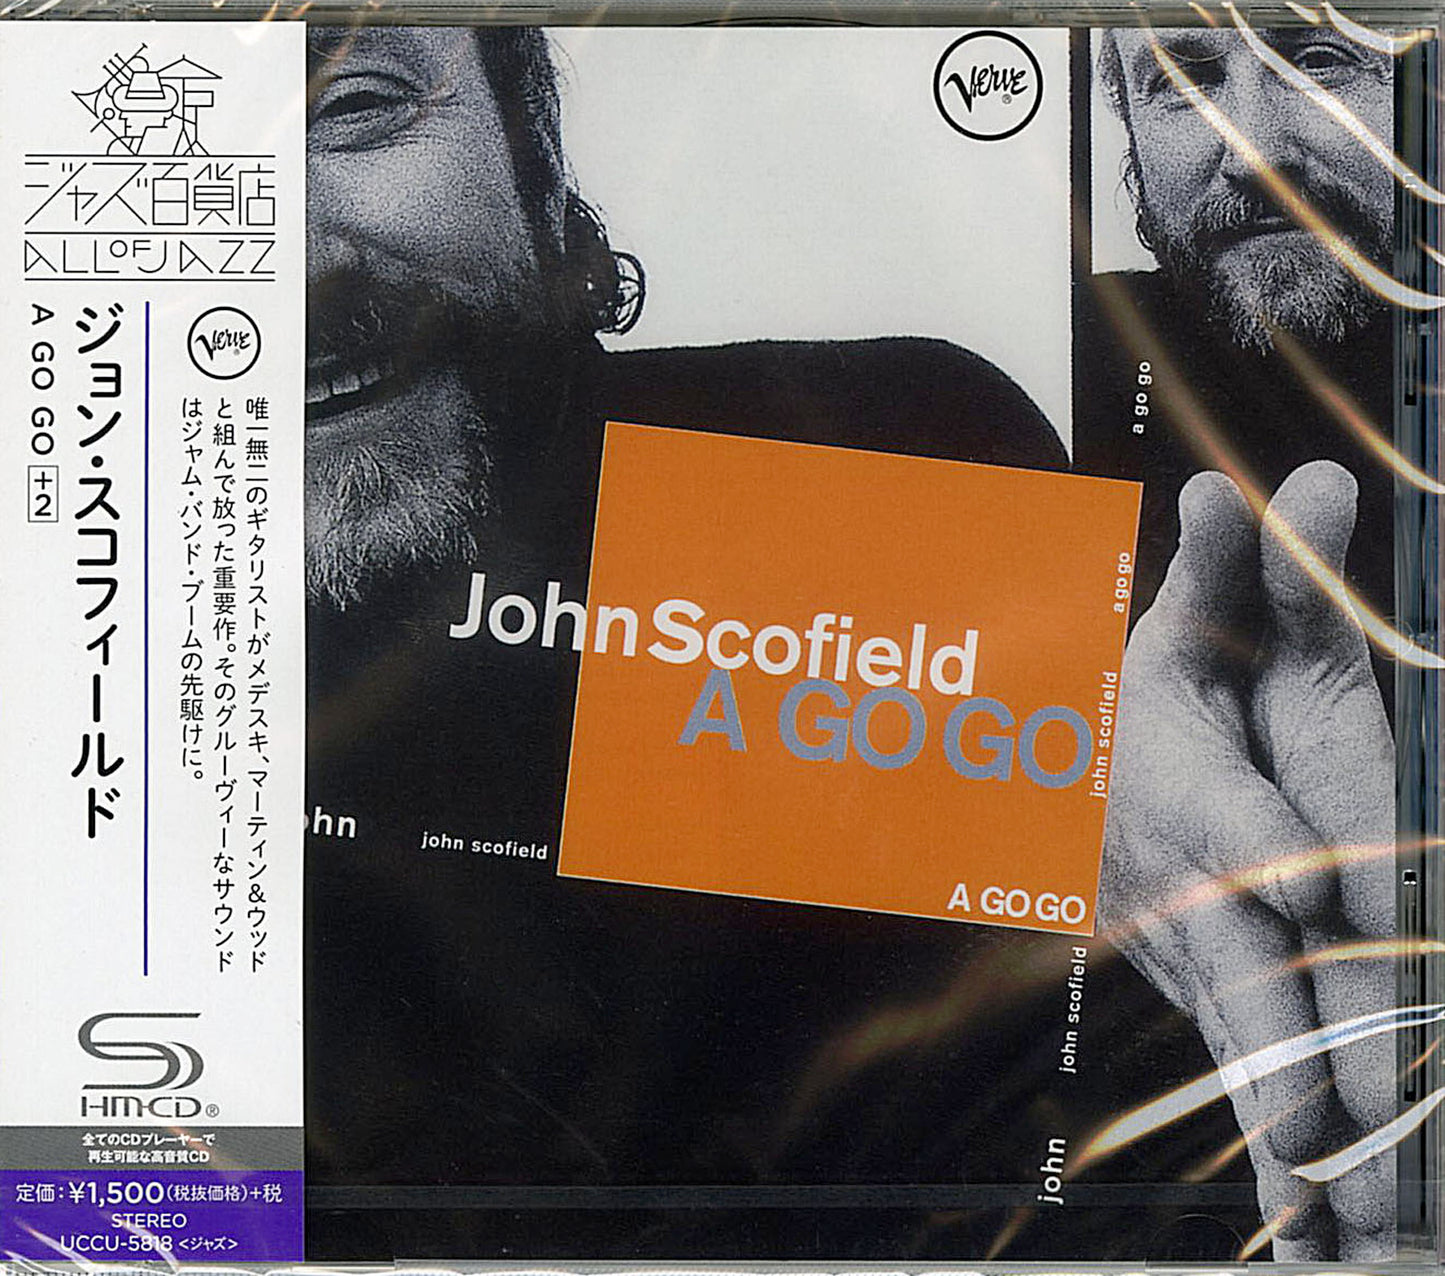 John Scofield - A Go Go - SHM-CD Bonus Track – Vinyl Japan Store